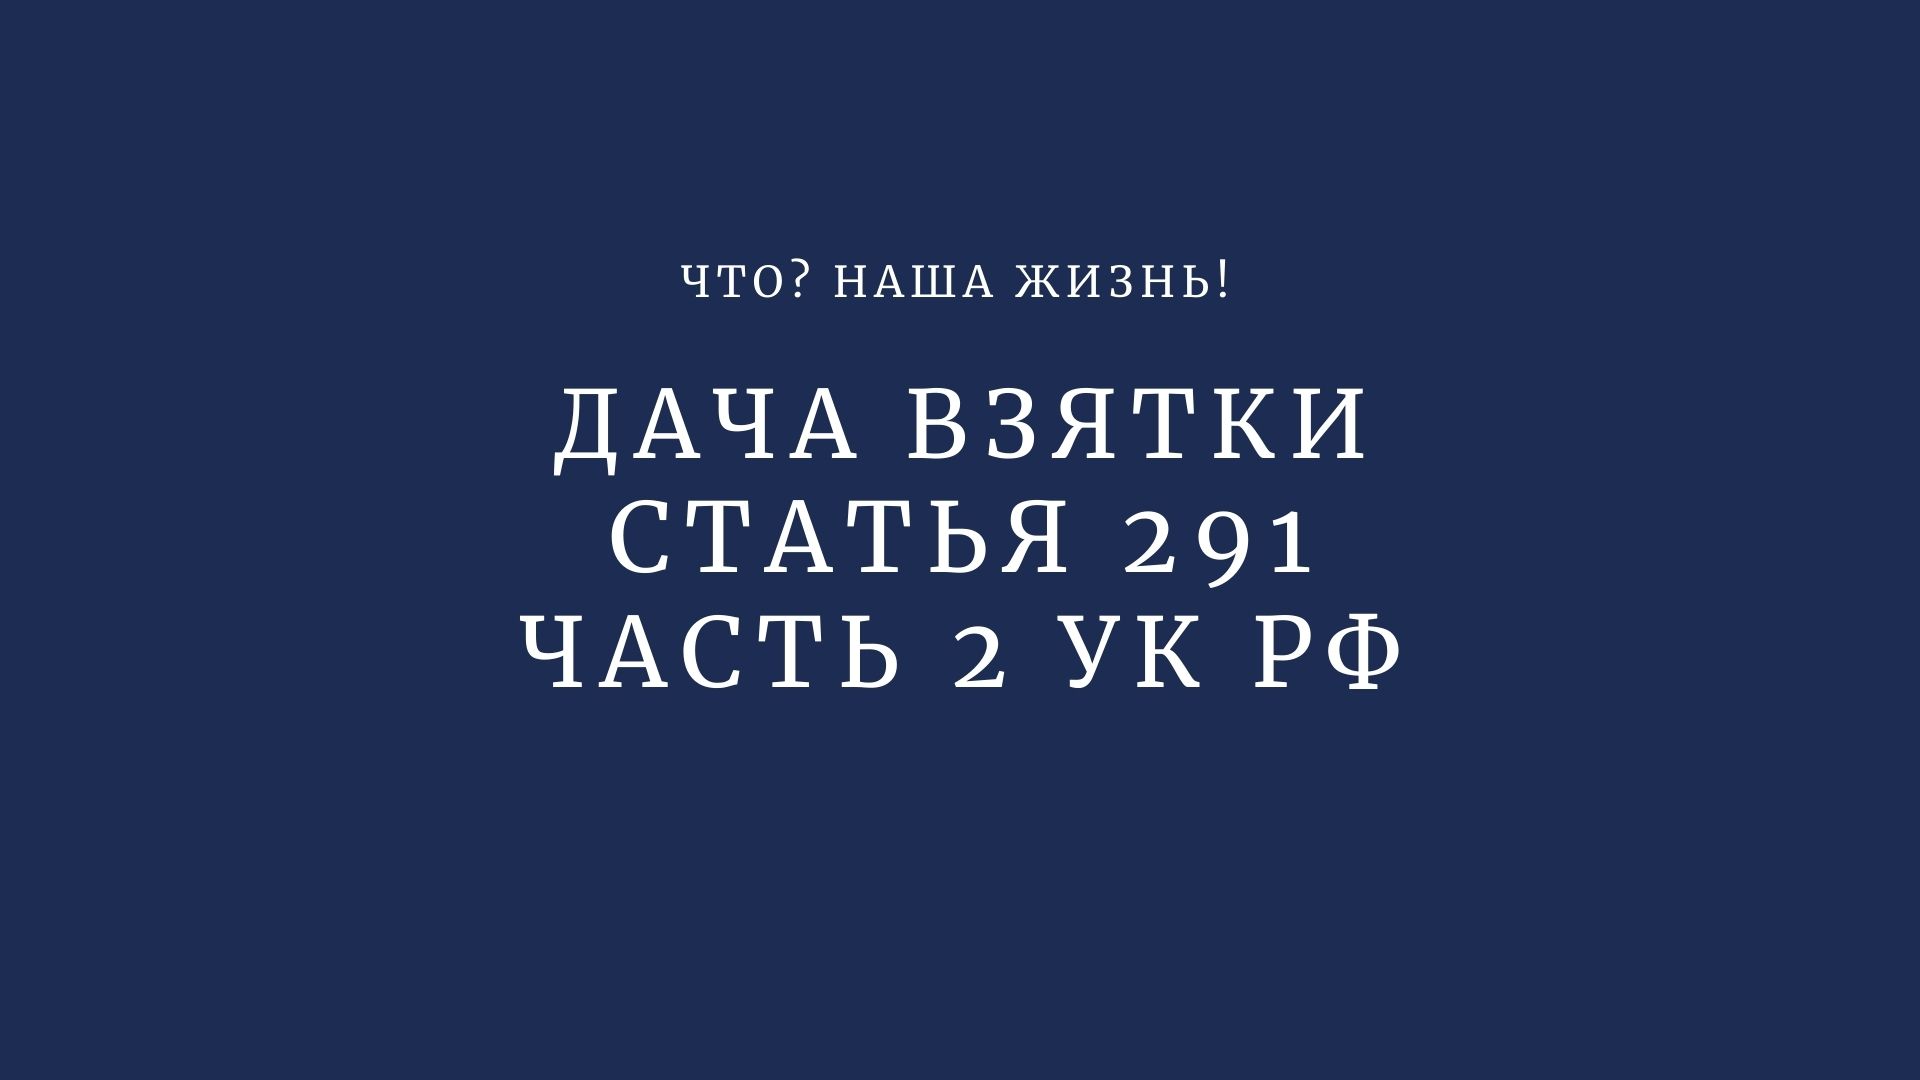 290 291 ук рф